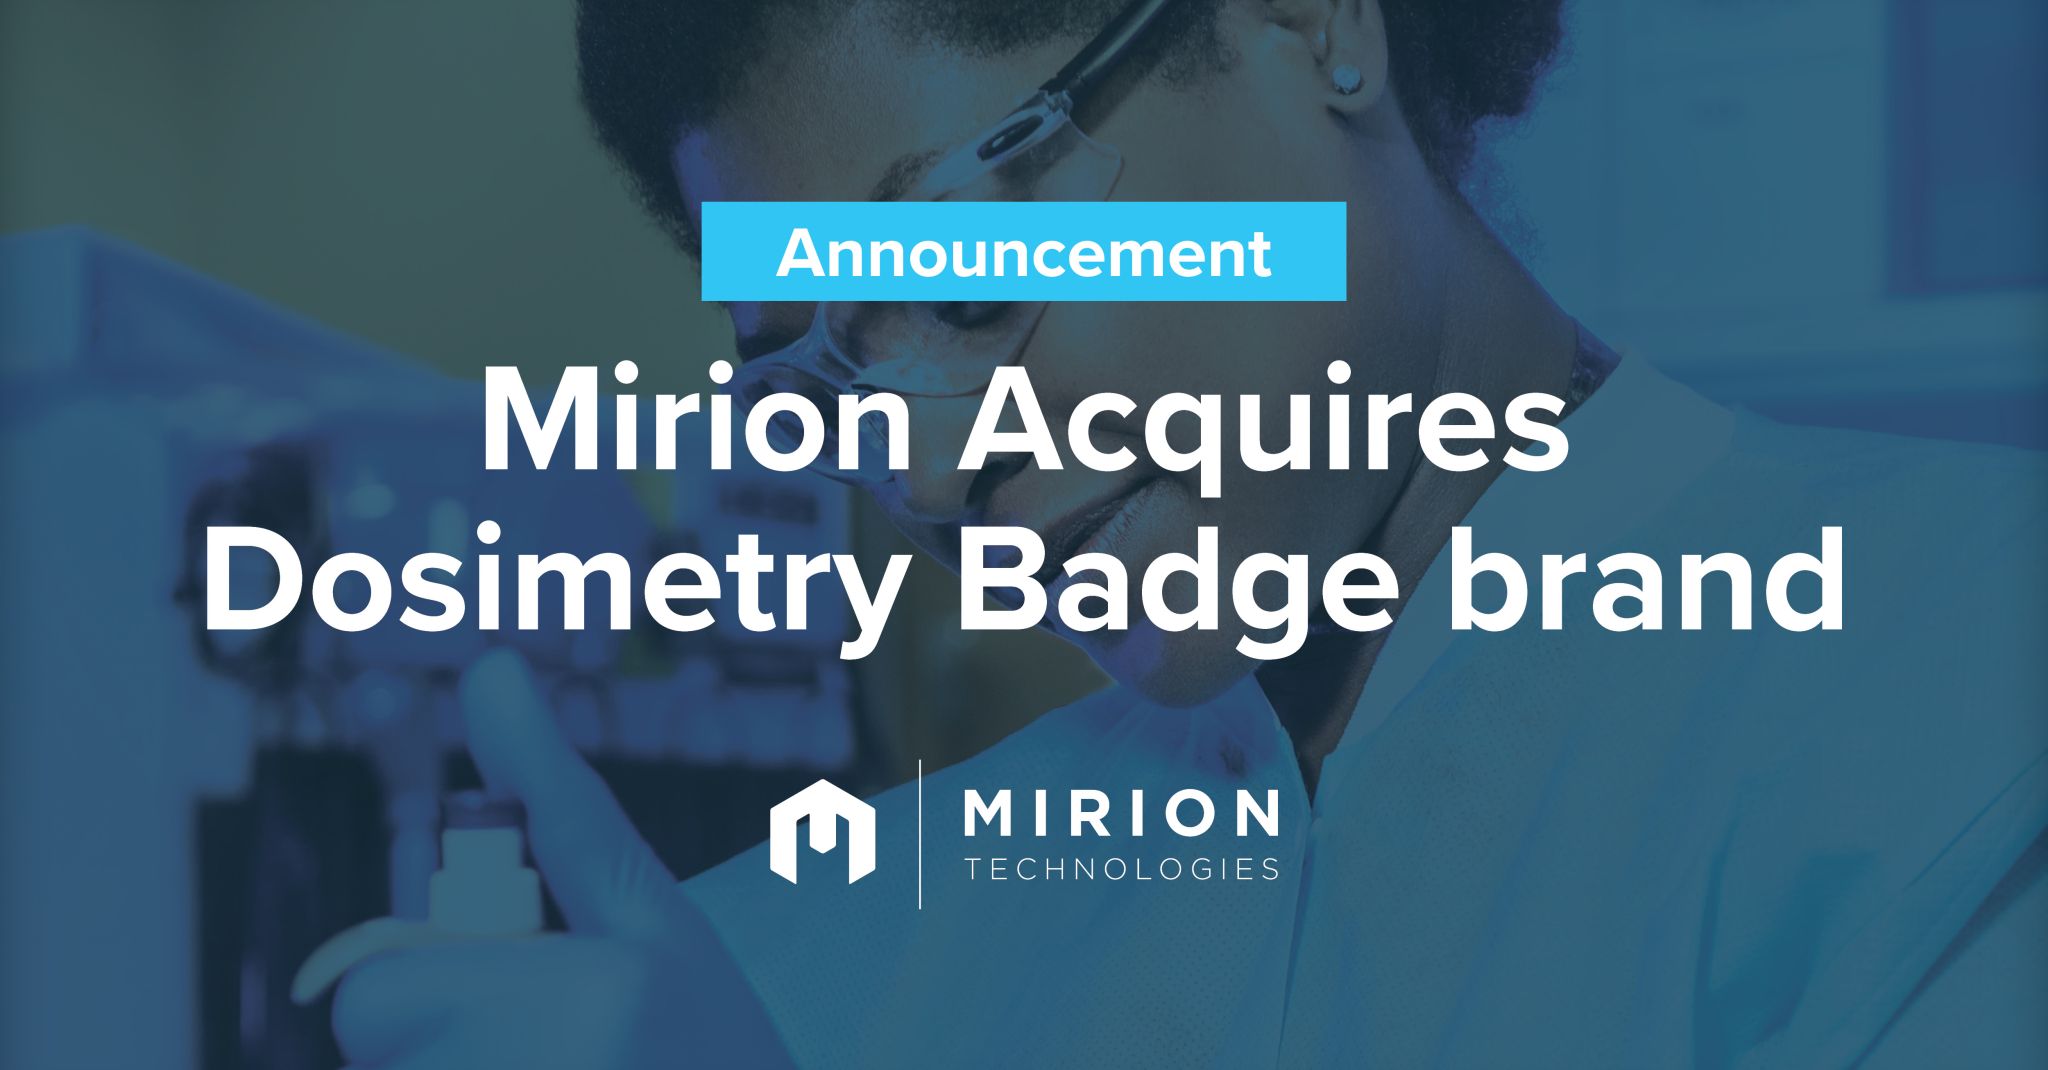 Charterhouse portfolio company Mirion Technologies, Inc. announces its acquisition of Dosimetry Badge brand. Module Image